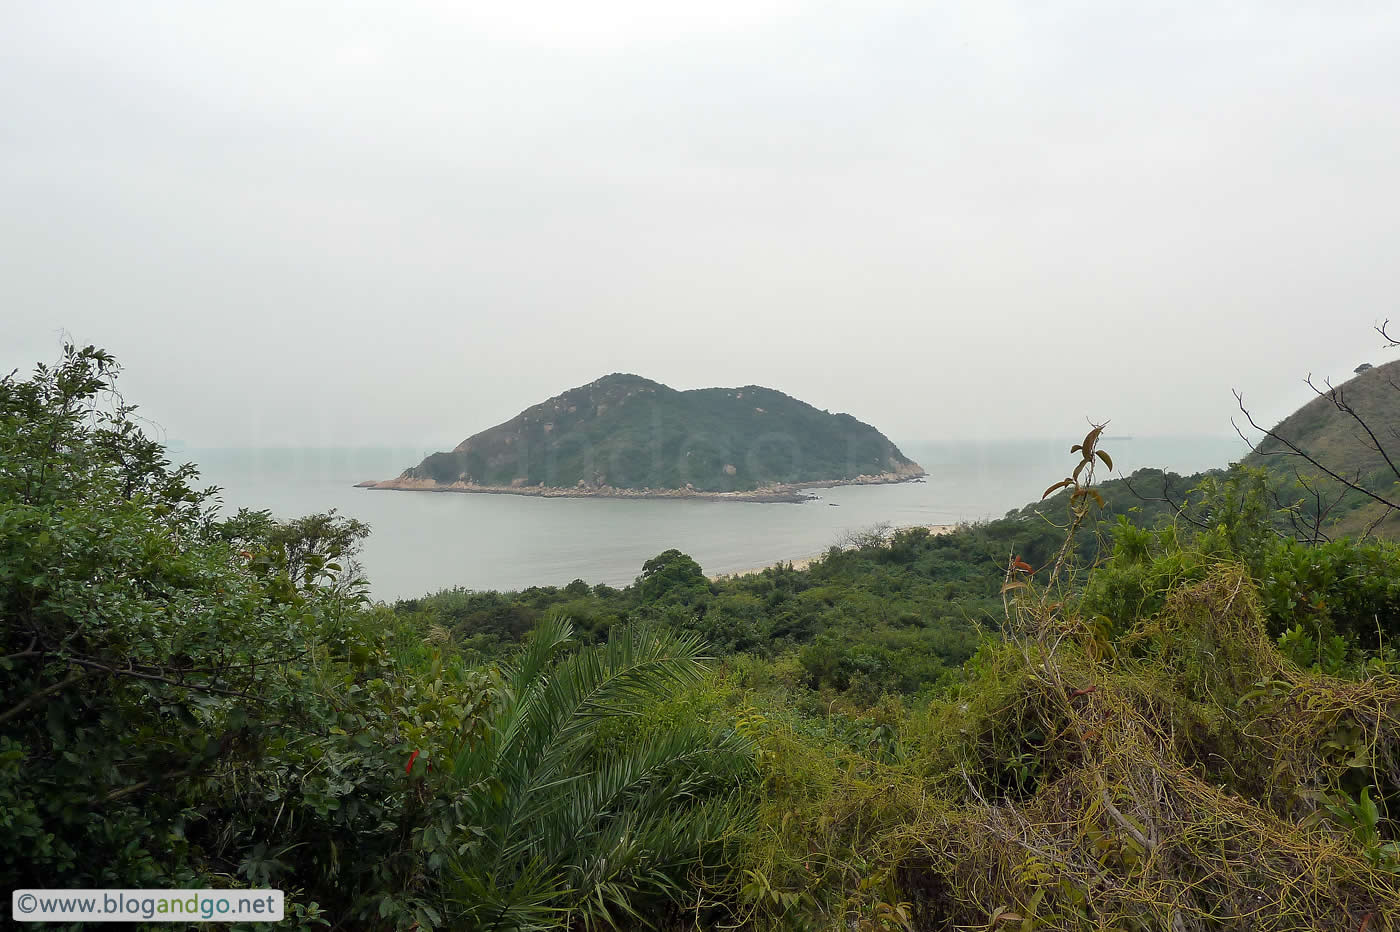 Lantau Trail 7 - Tsin Yu Wan and Peaked Hill island